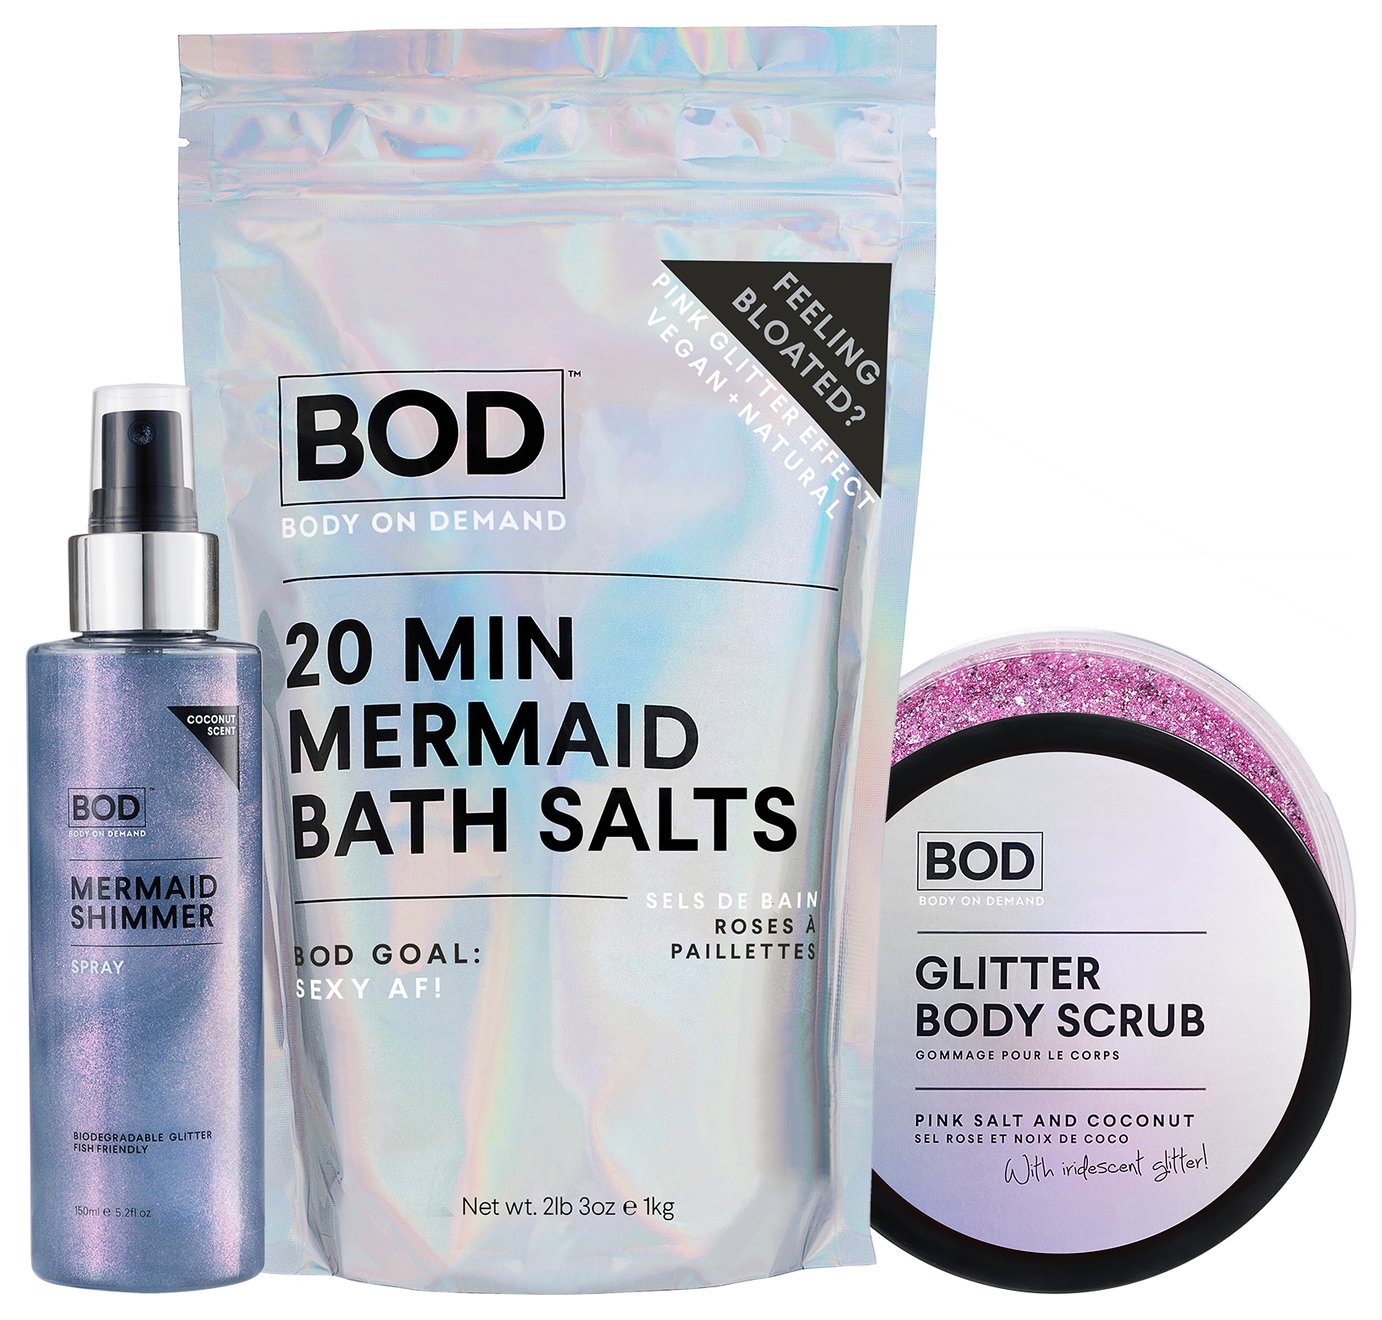 Body On Demand Bath Salts review